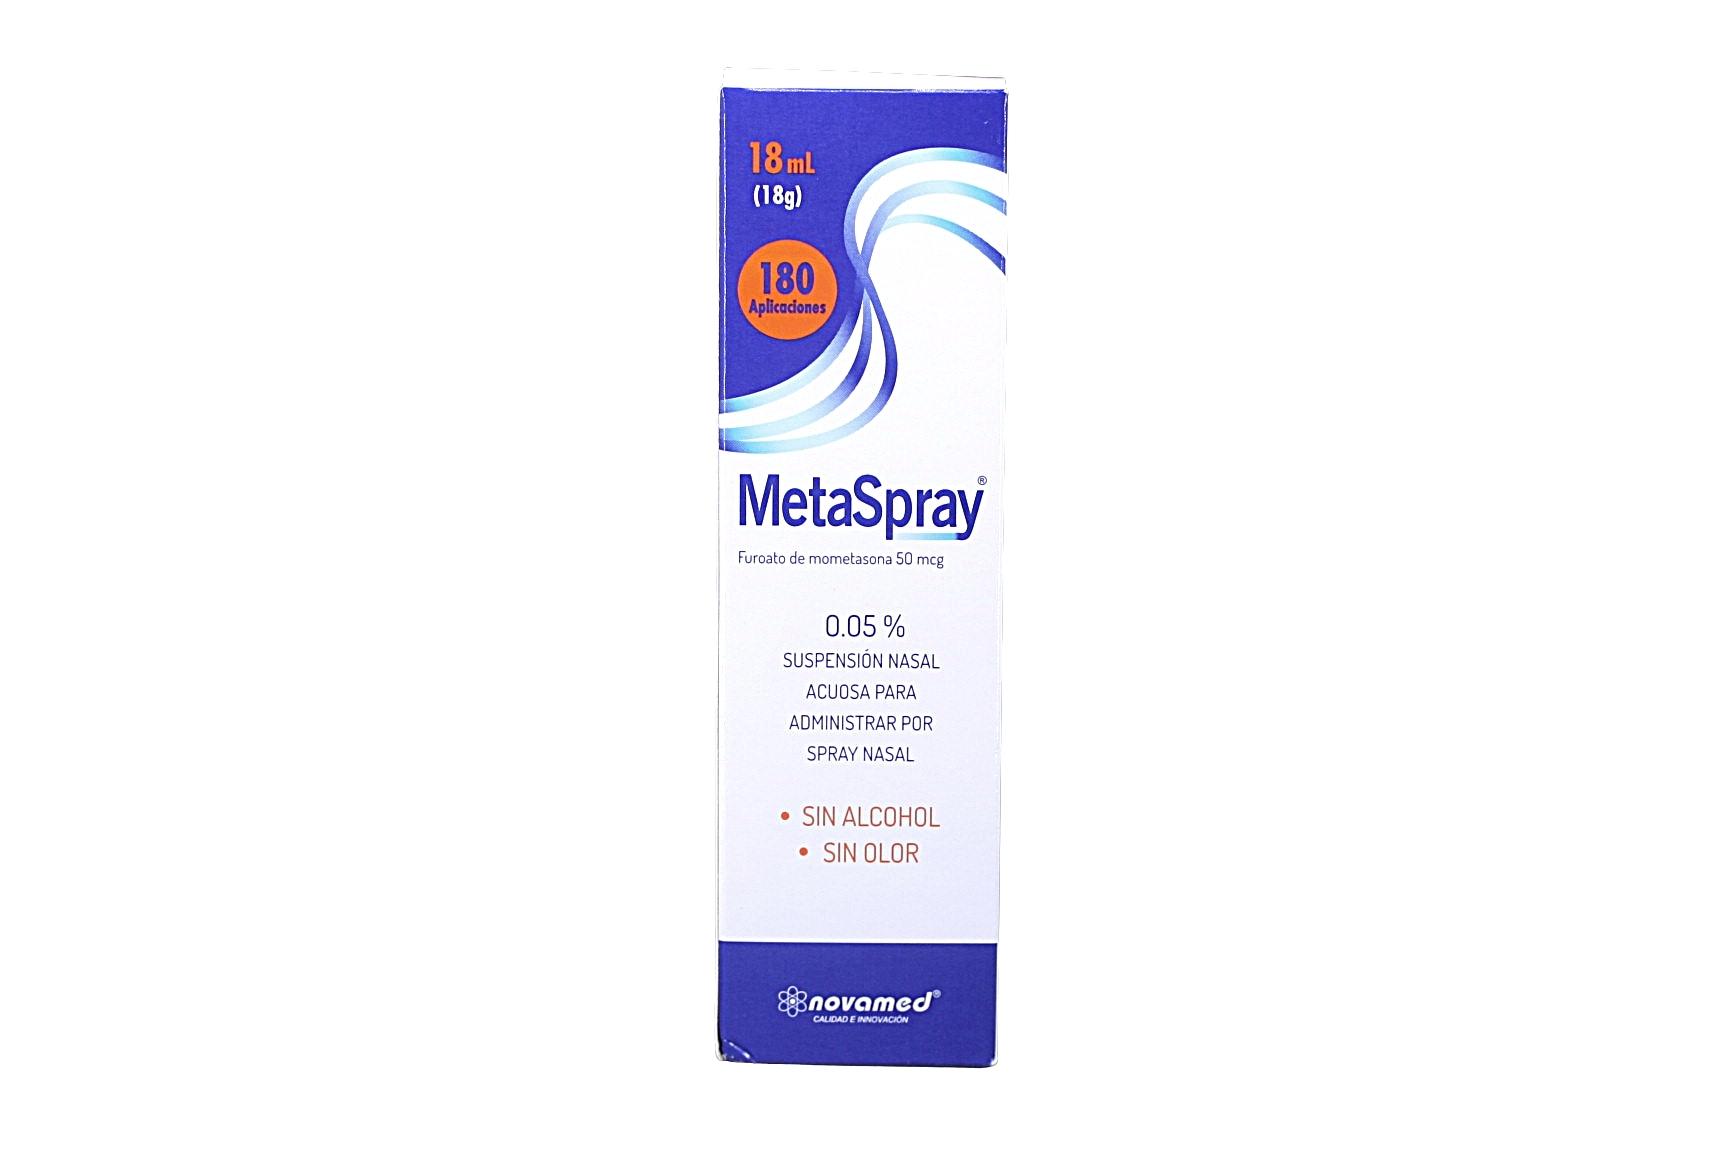 Metaspray Moetasona 50 mcg Novamed Spray Nasal Frasco x 180 Aplicaciones